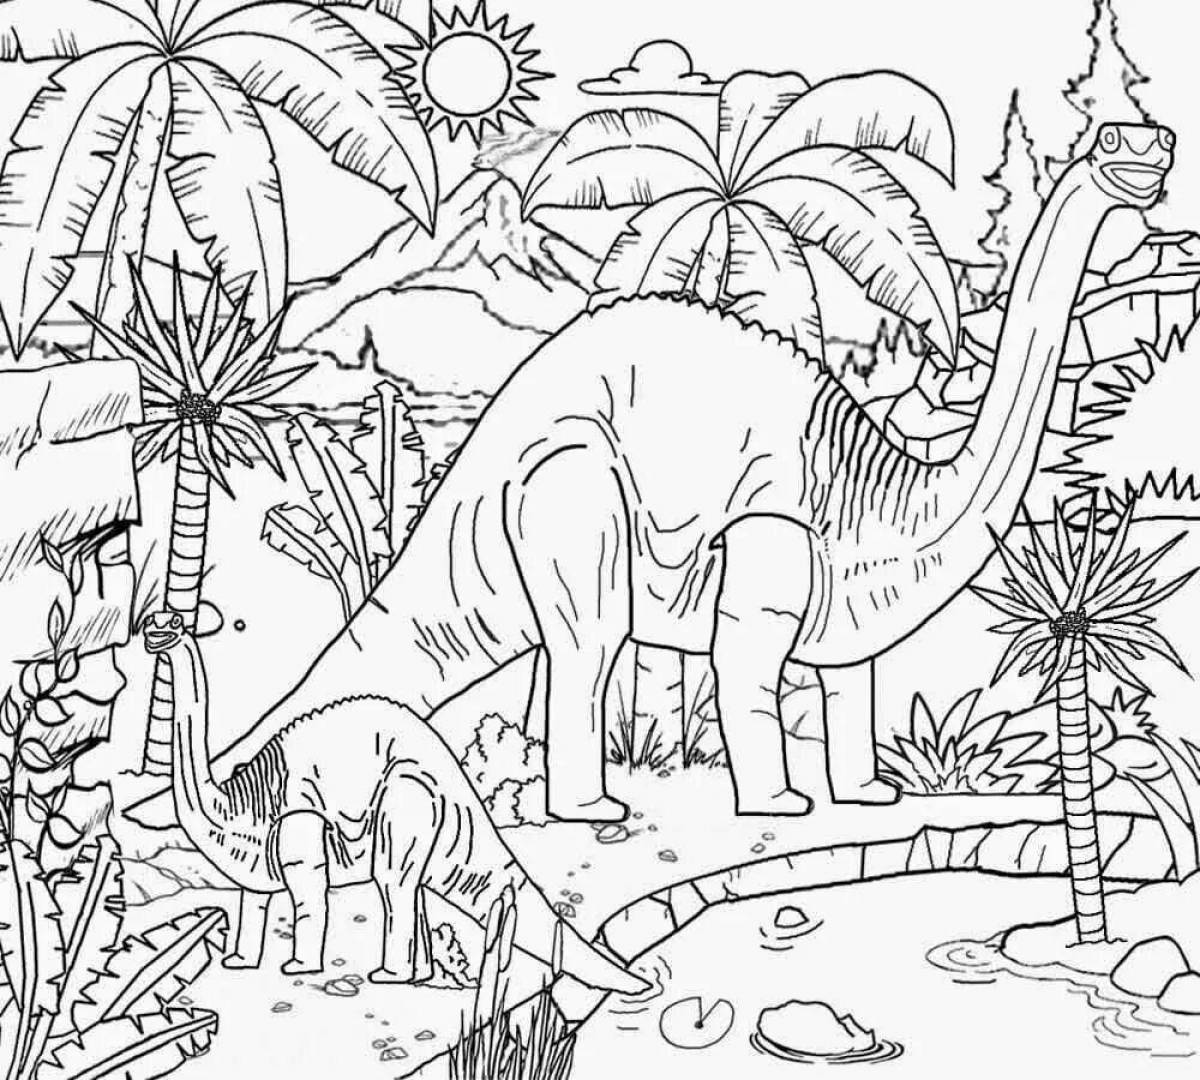 Dinosaur World coloring page